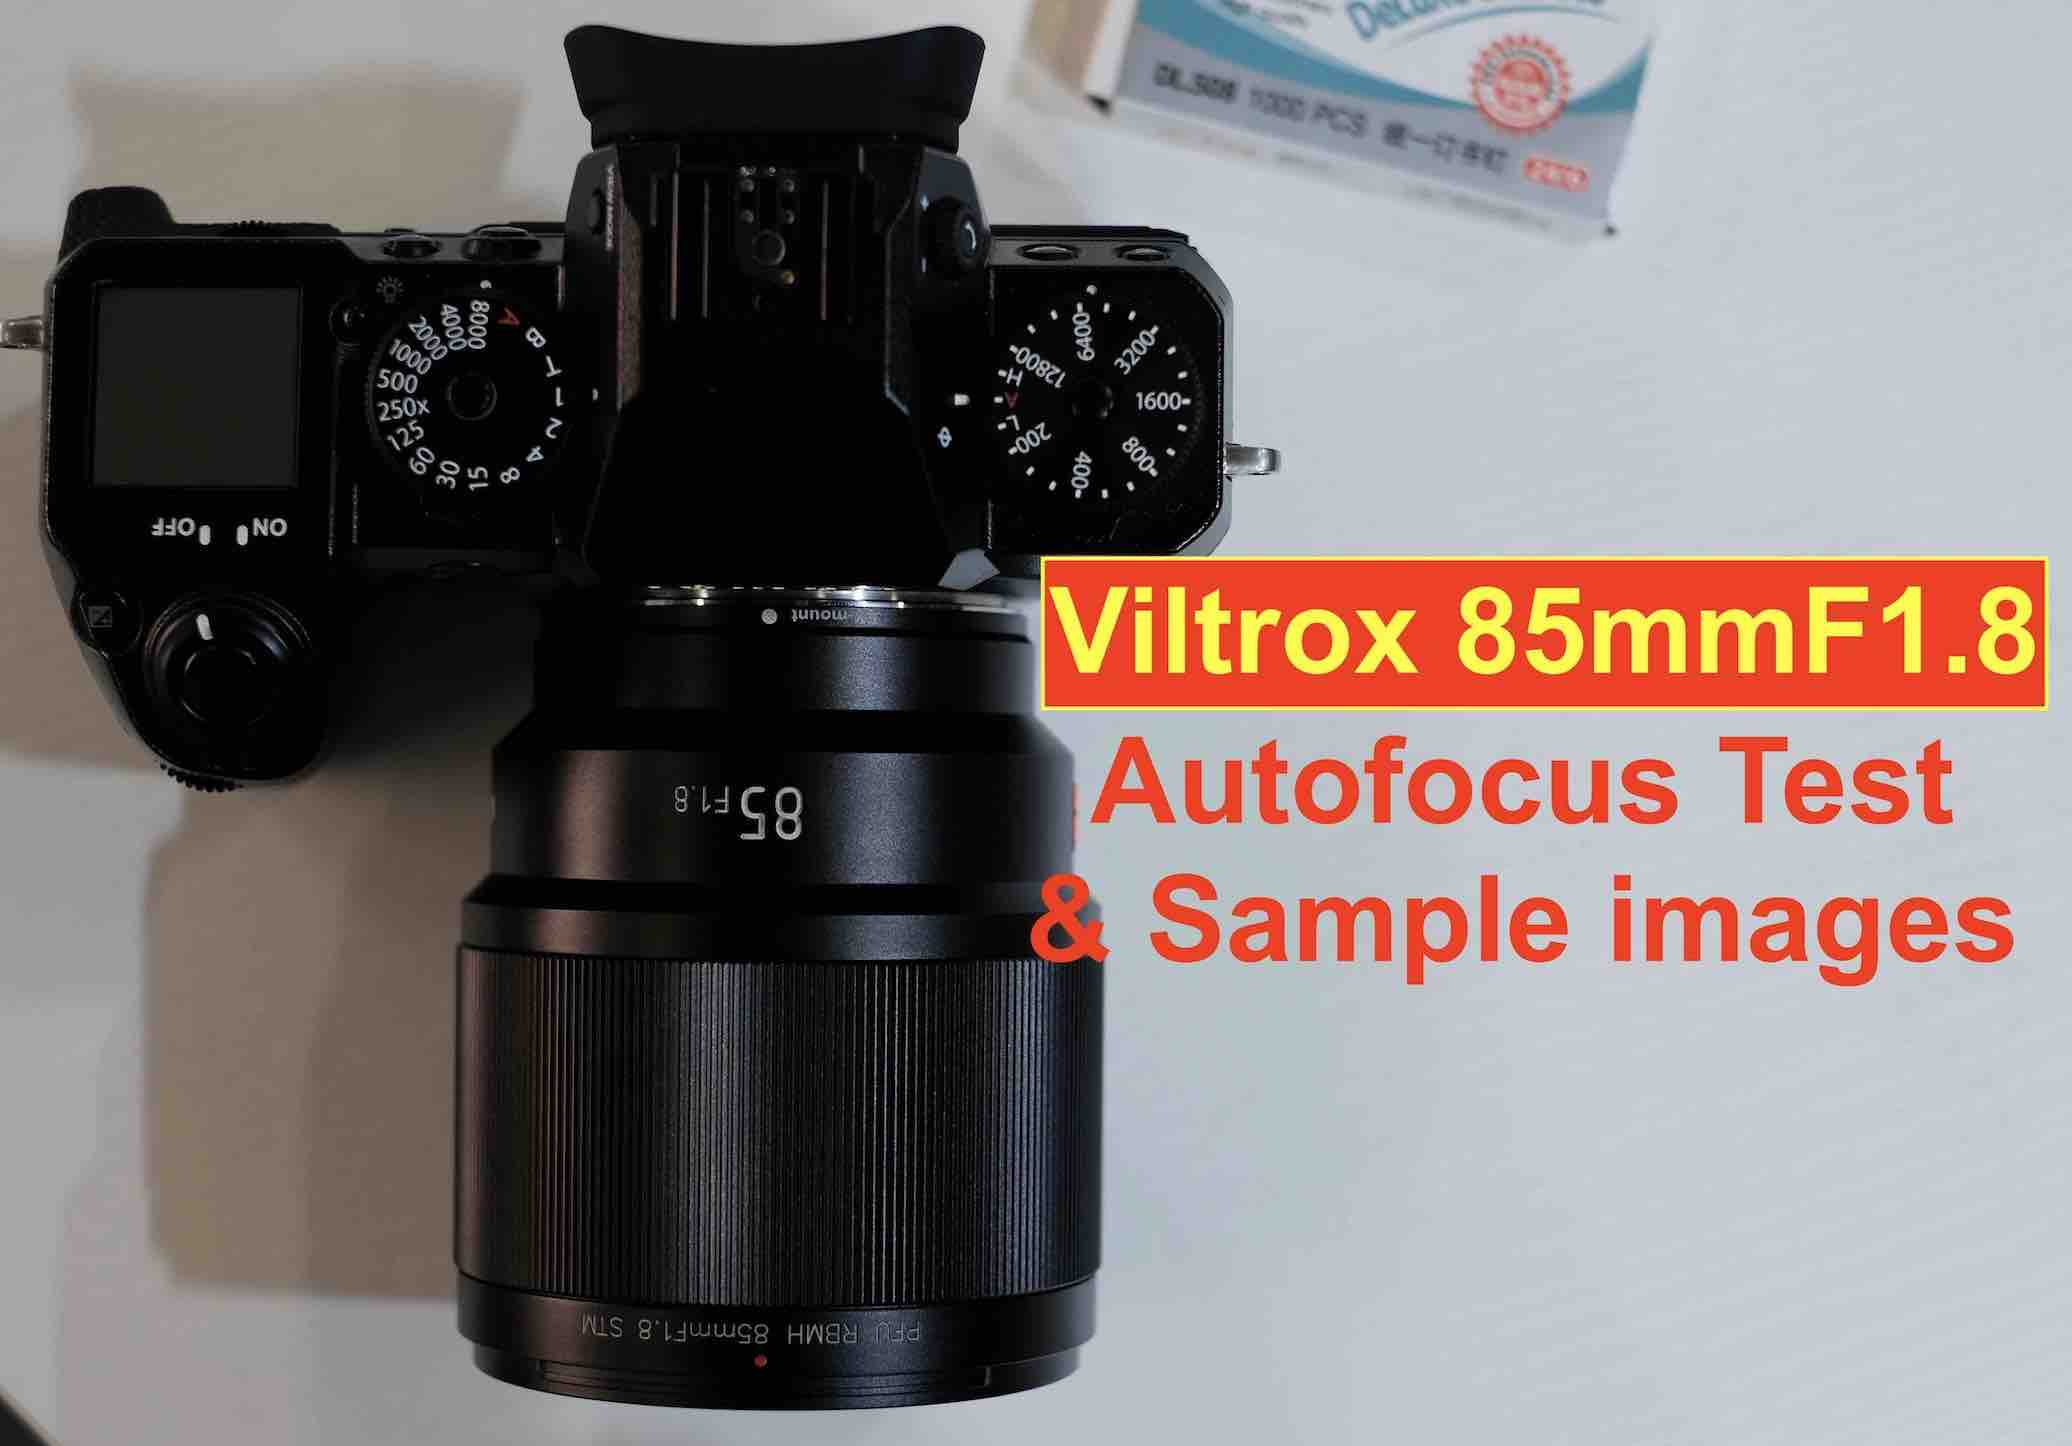 Viltrox 85mm F1.8 Fujifilm X Mount Autofocus Test Video with Images JPEG RAW to - Fuji Rumors